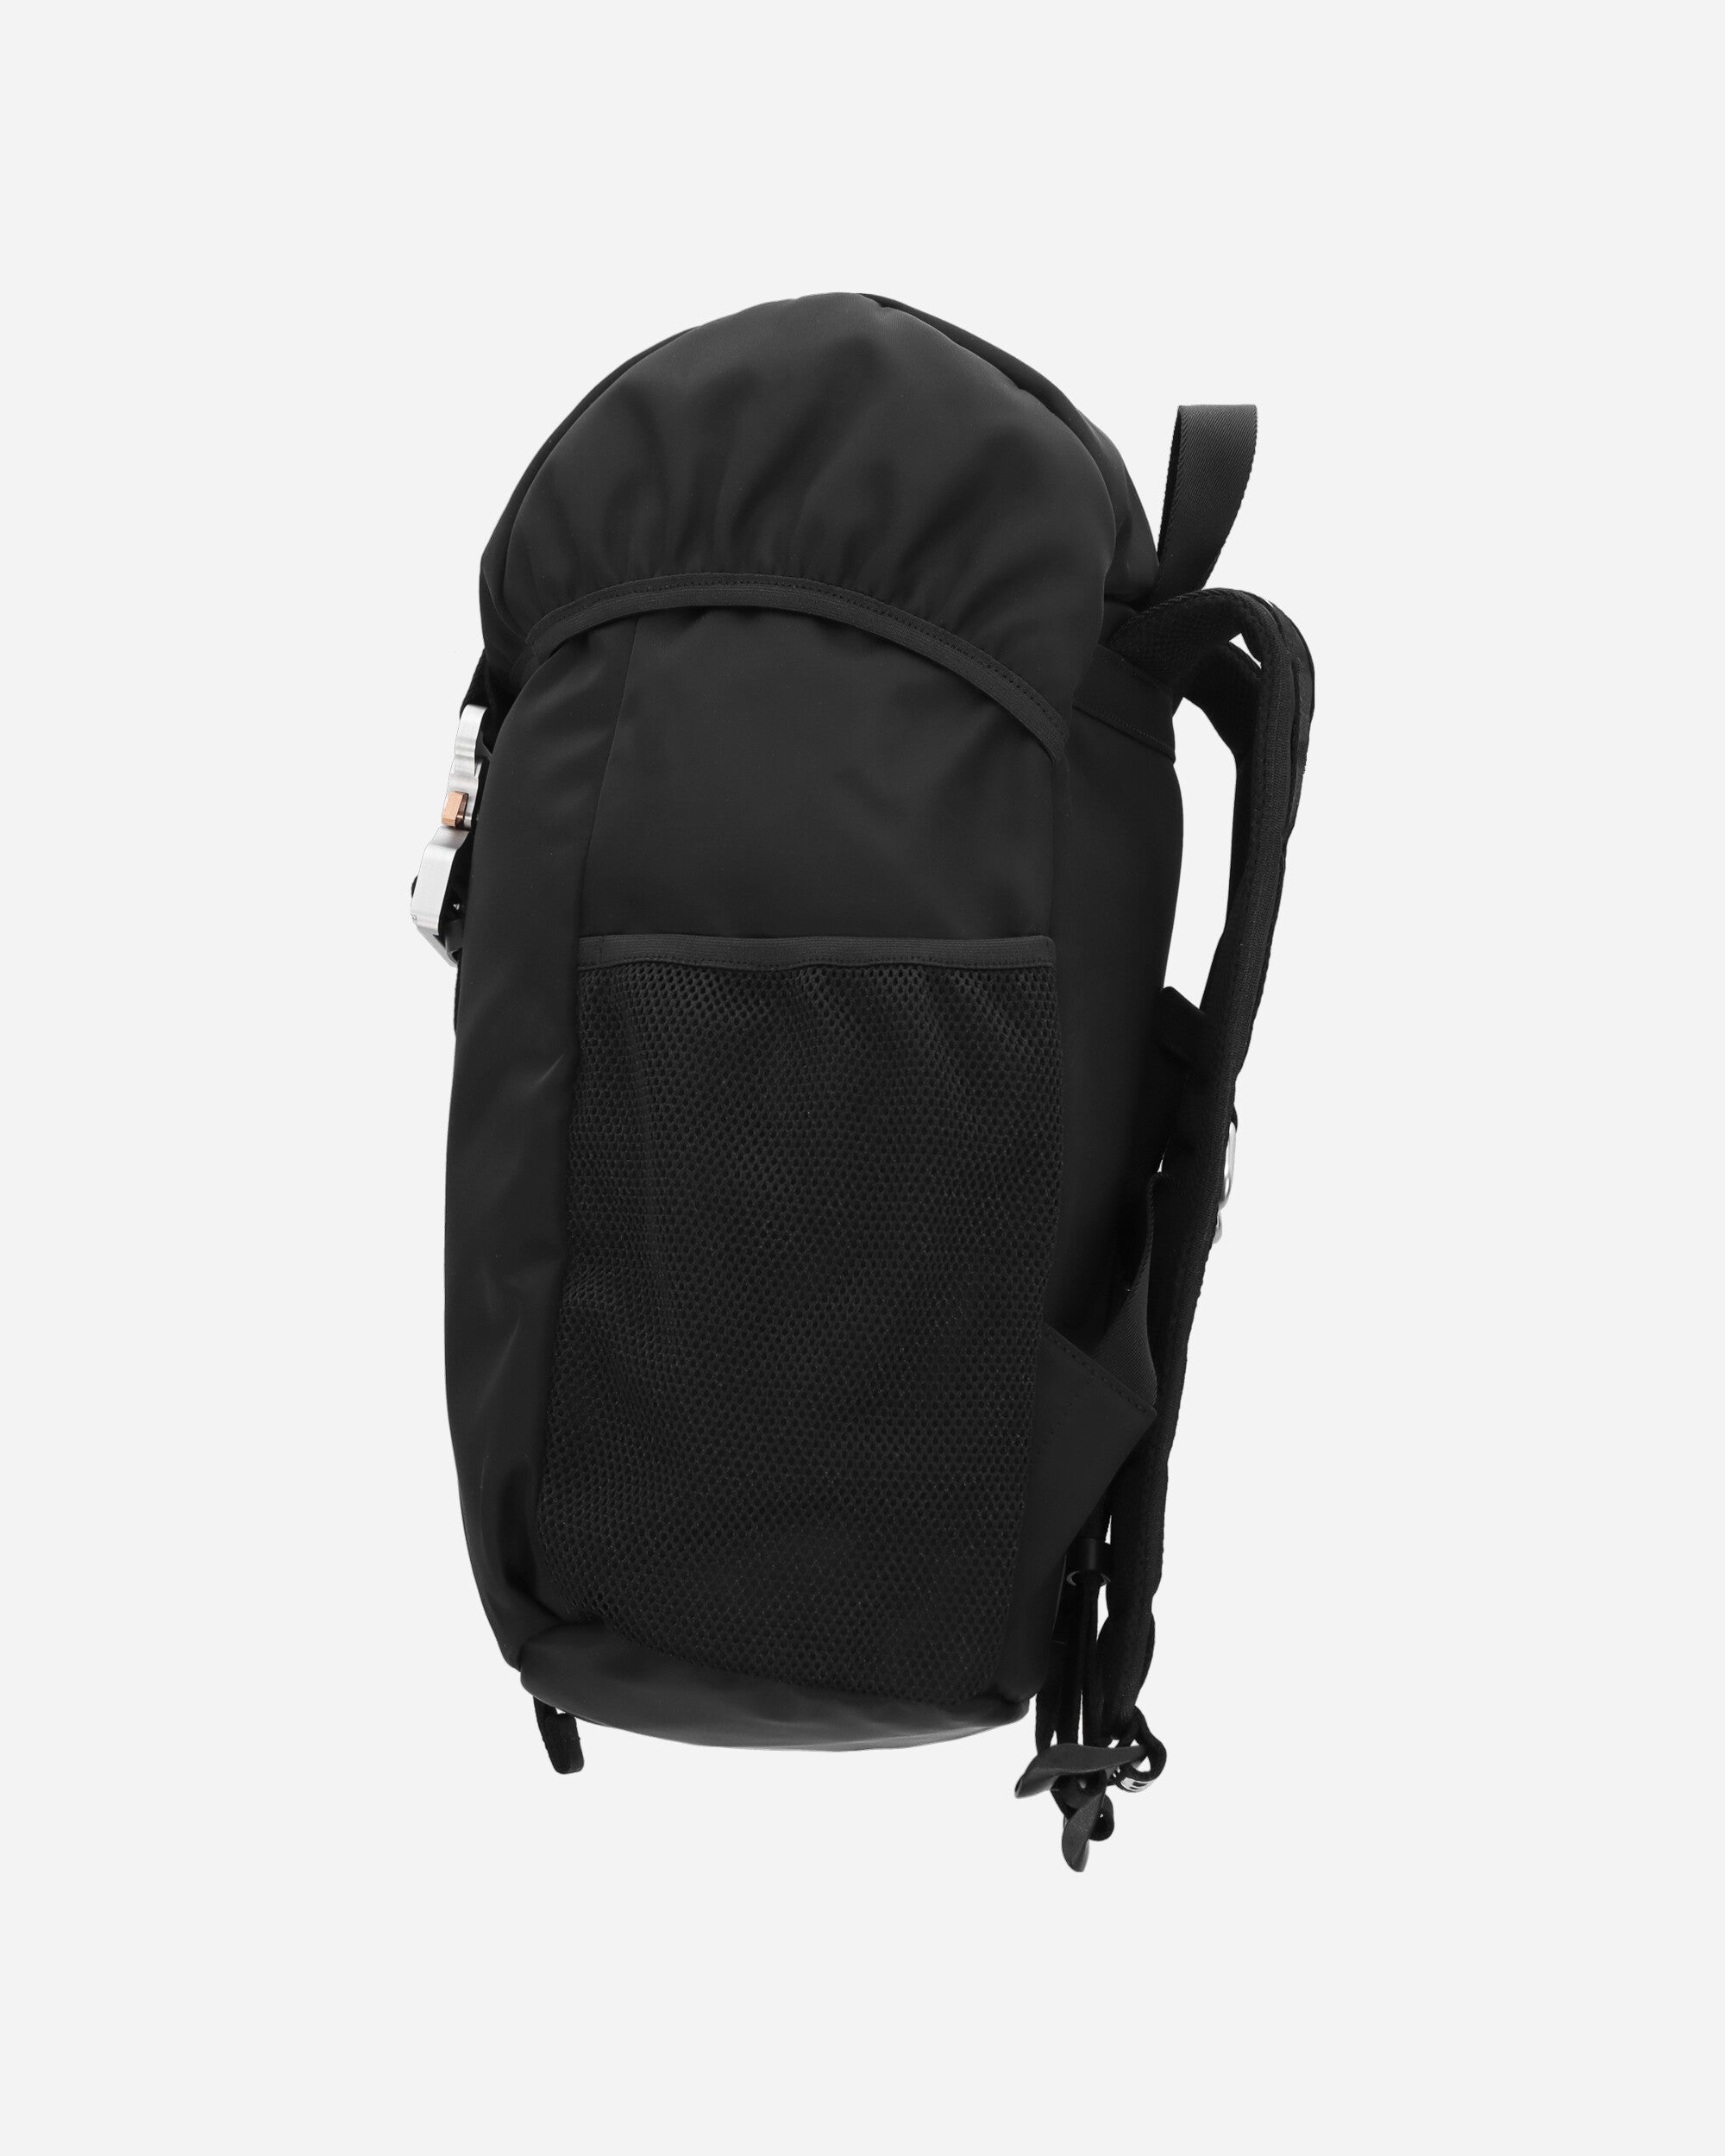 Buckle Camp Backpack Black